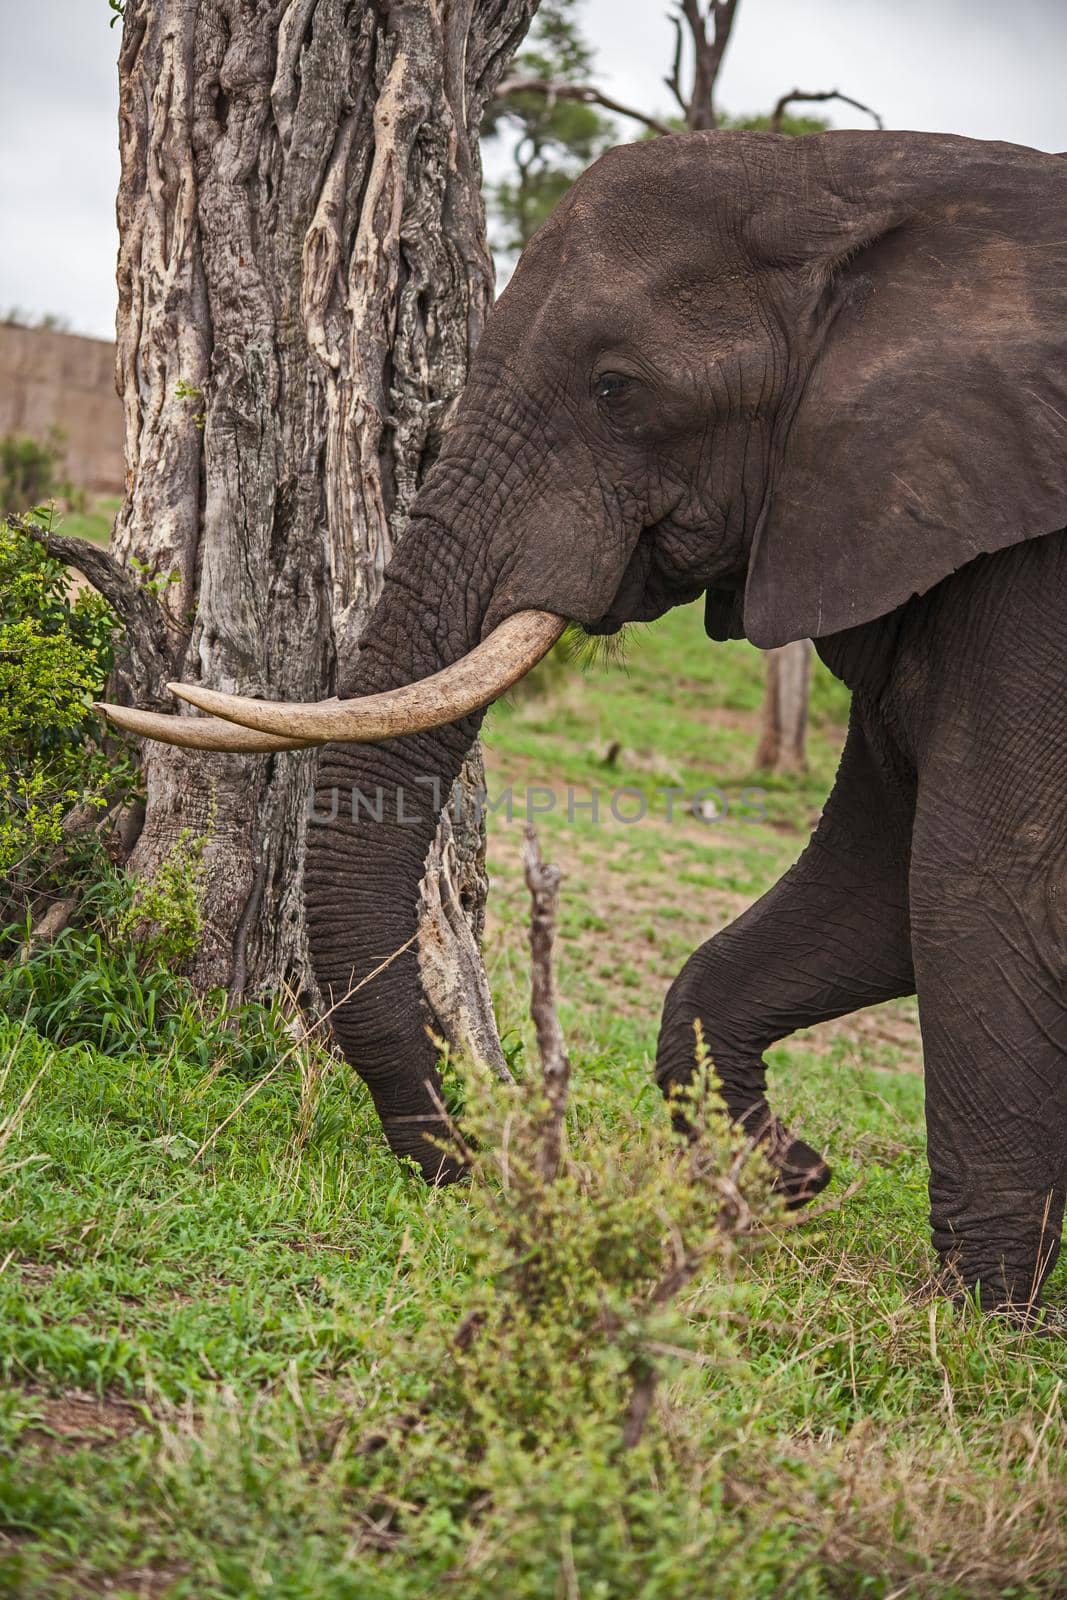 African Elephant (Loxodonta africana) 15117 by kobus_peche